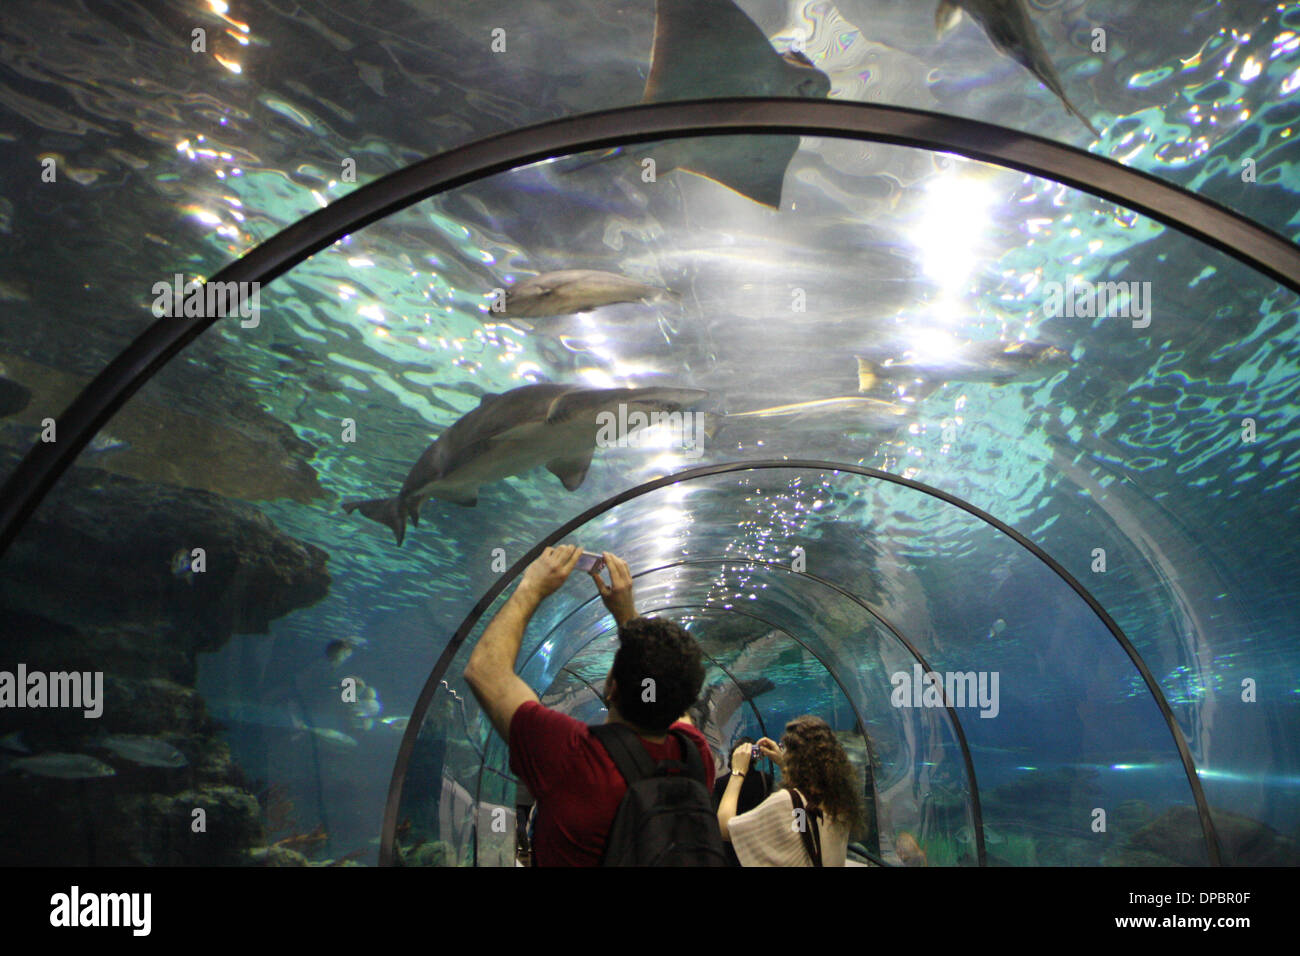 Barcelona Aquarium with sharks Stock Photo - Alamy